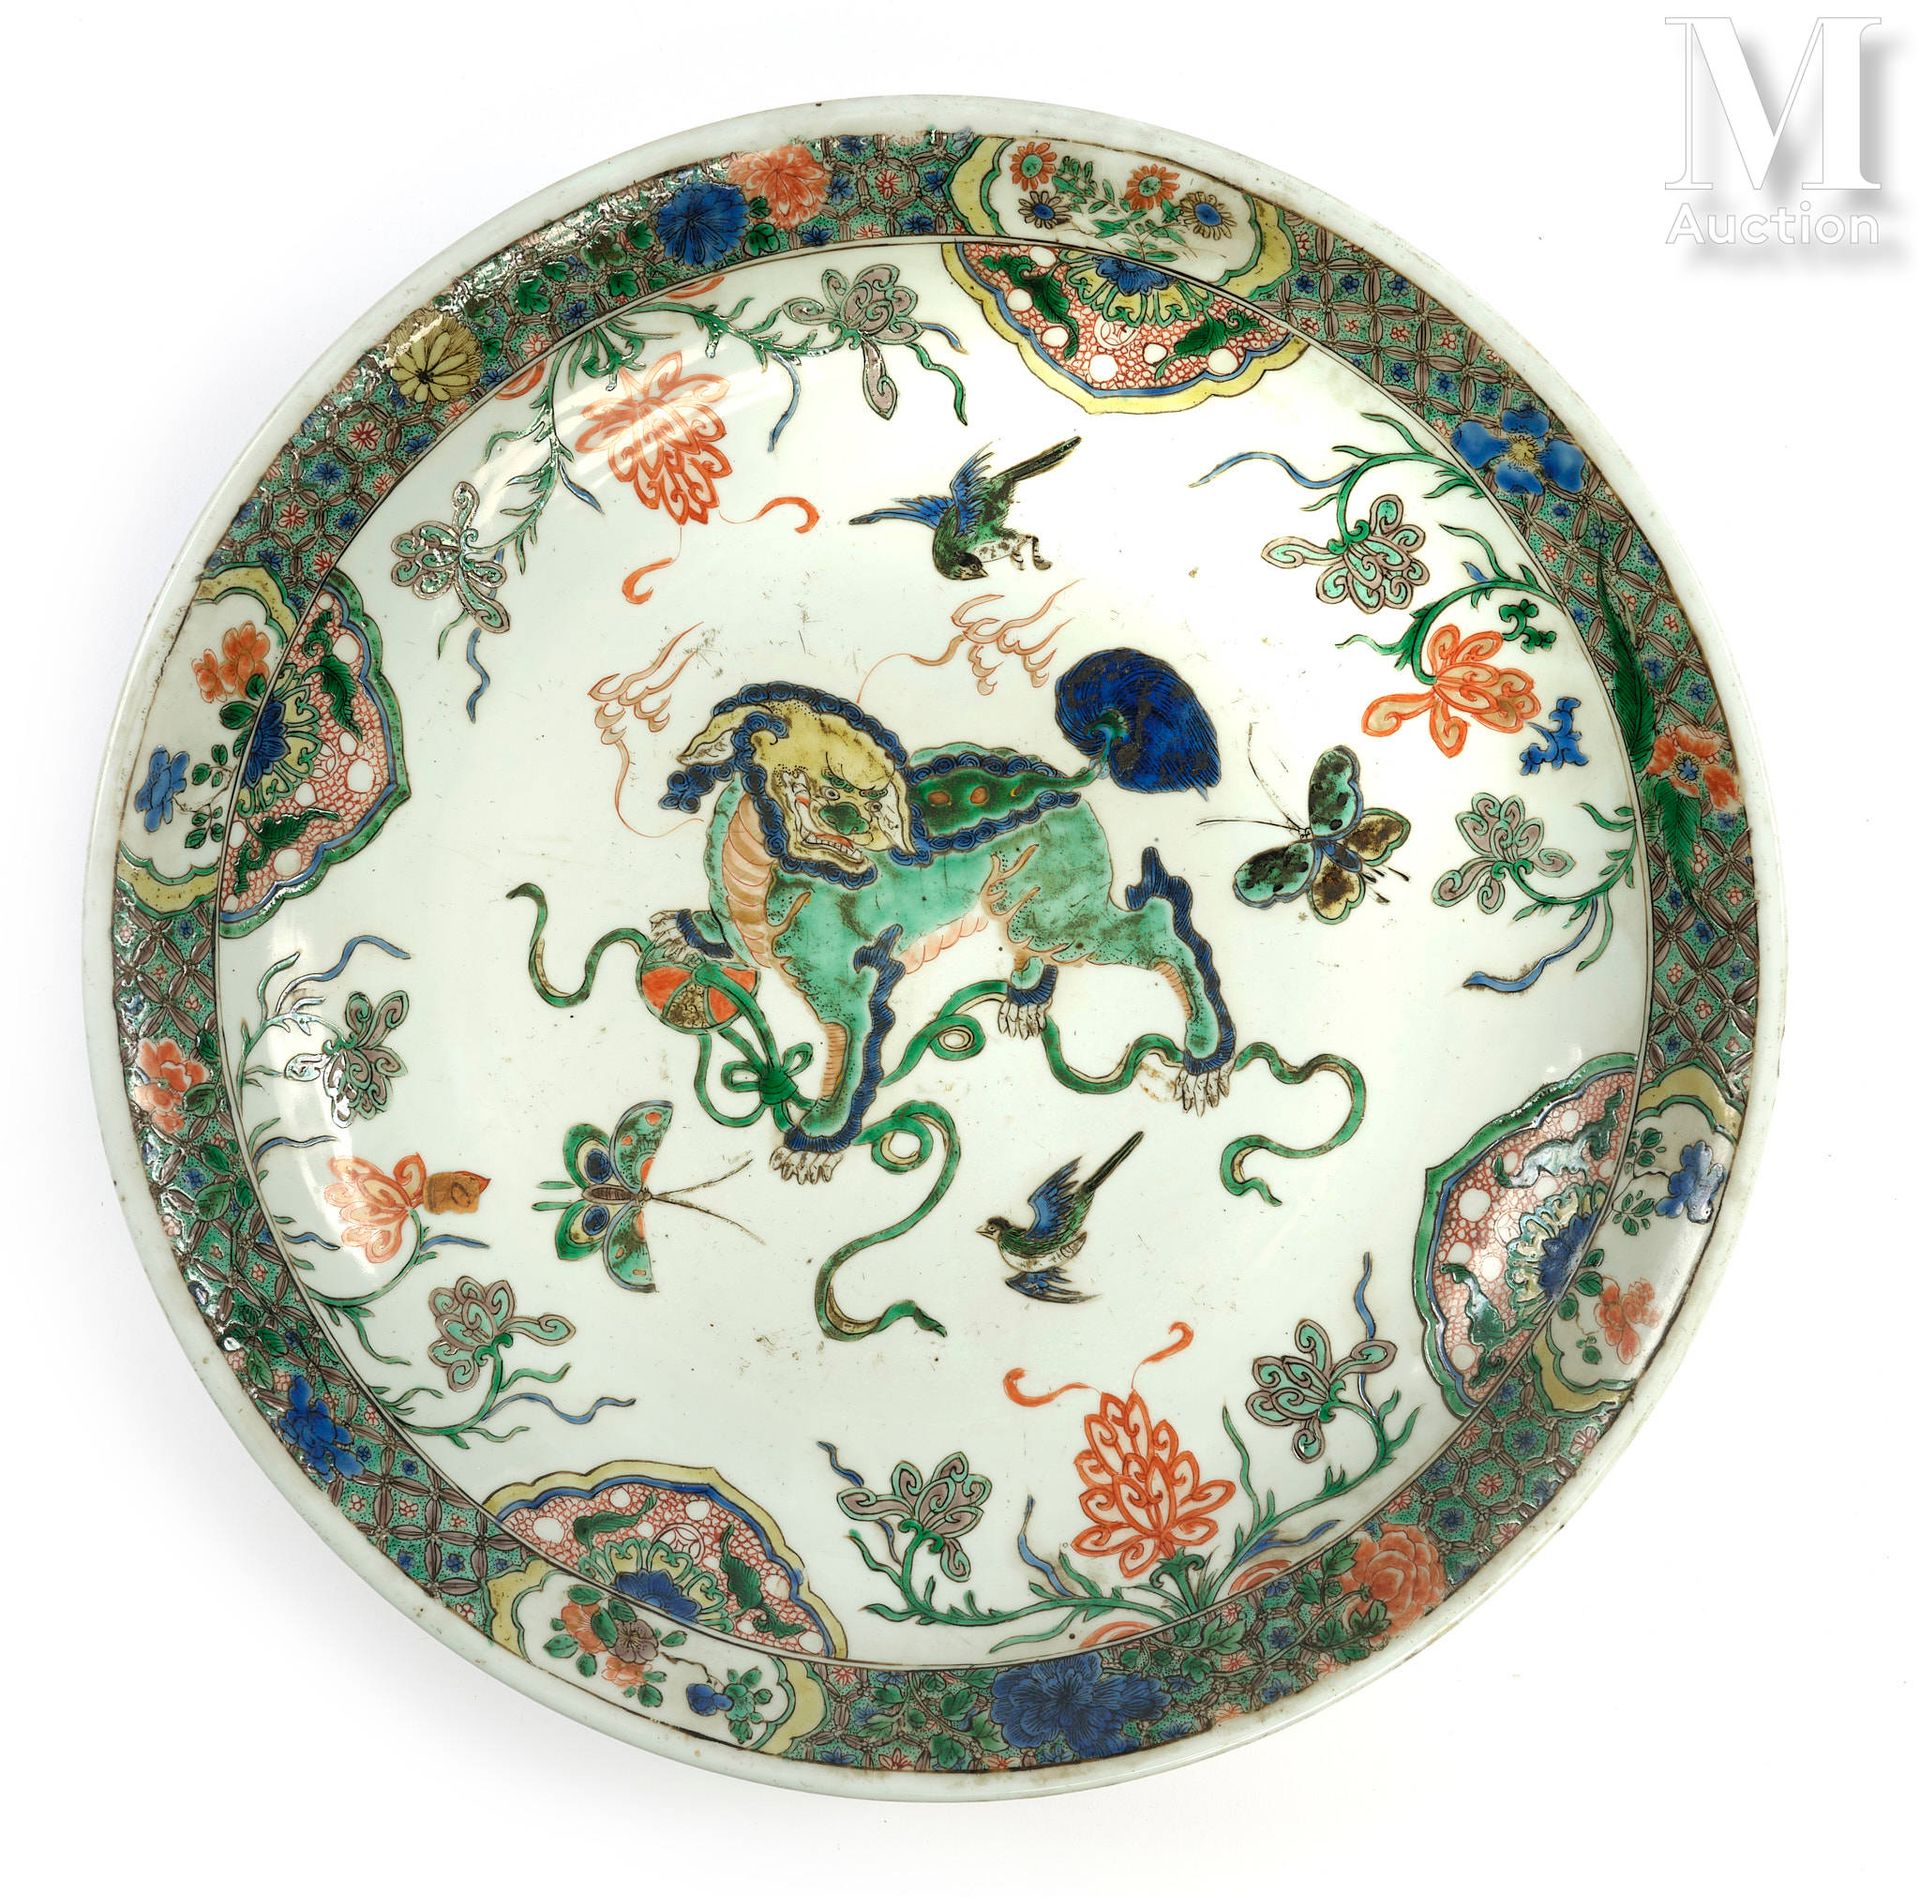 CHINE, Epoque Kangxi, XVIIIe siècle 大瓷盘

白底绿釉装饰的奇美拉，中间有锦球，周围有鲜花和蝴蝶，边框上有绿釉锦缎的楣子。
&hellip;